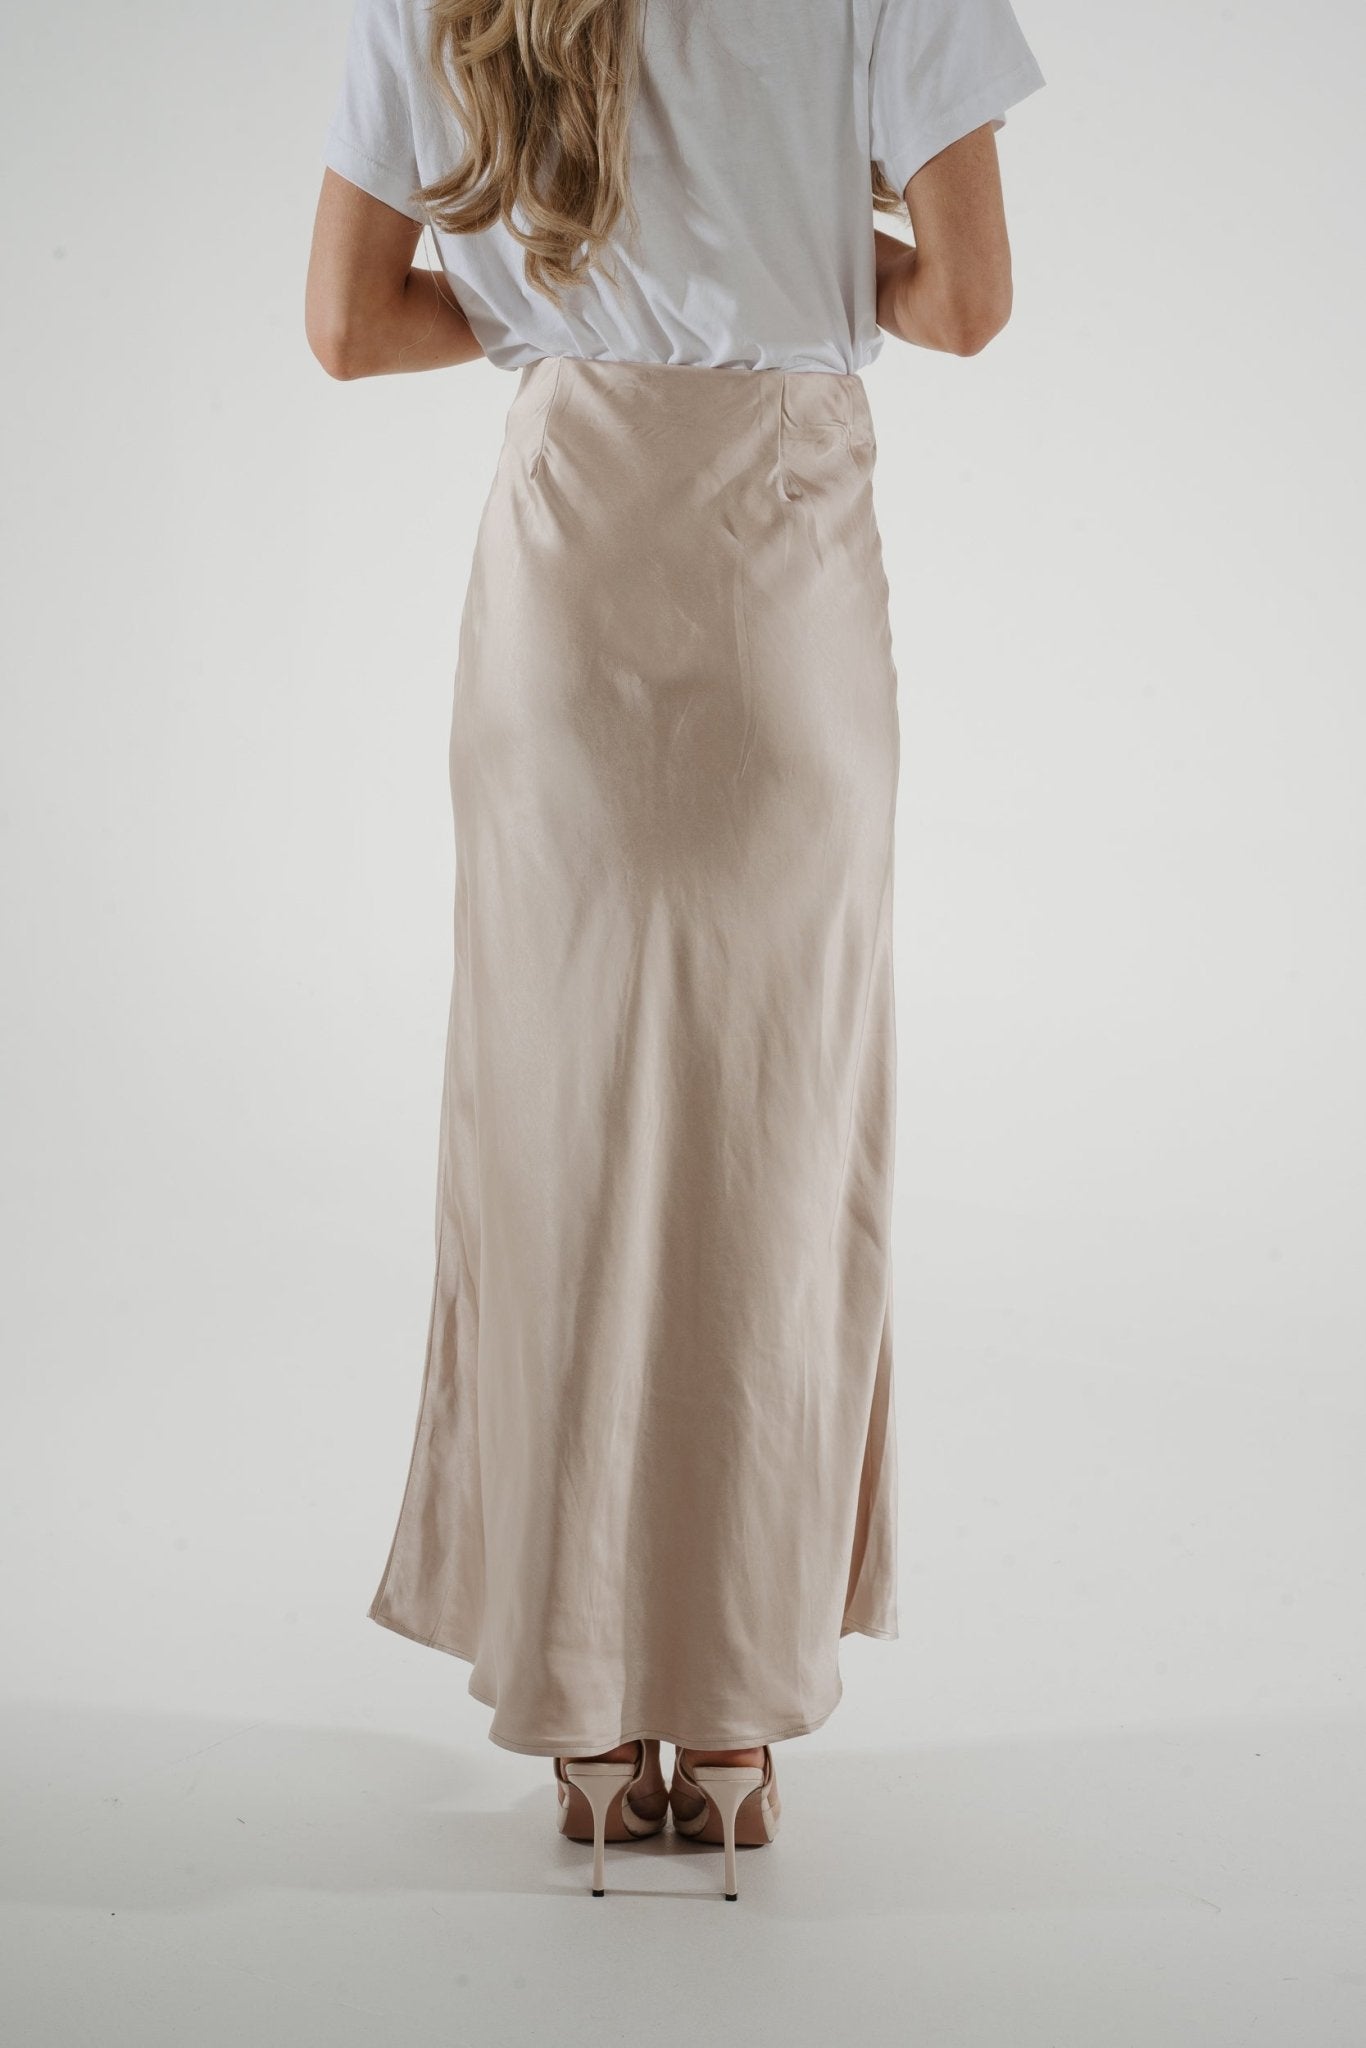 Jane Longline Satin Skirt In Neutral - The Walk in Wardrobe